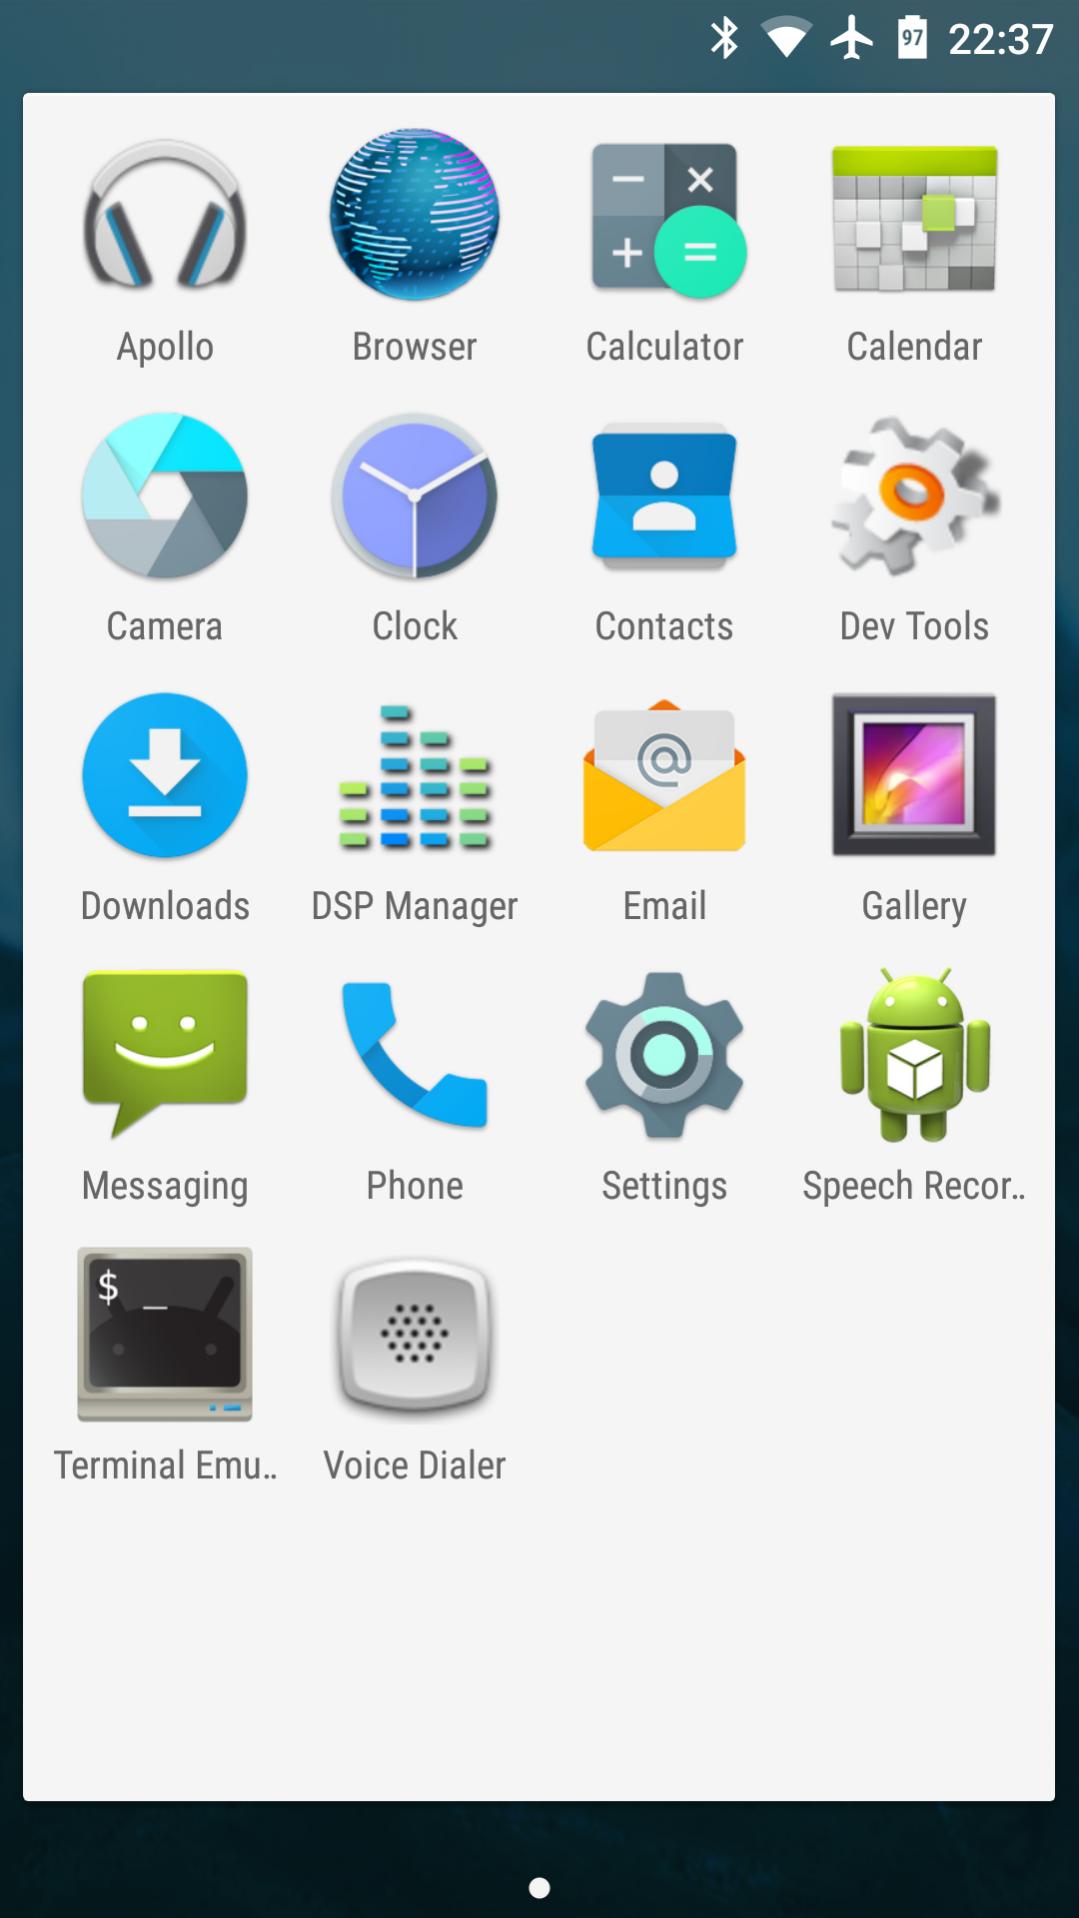 Samsung-Galaxy-S4-CyanogenMod-12-Android-5.0-Lollipop-6